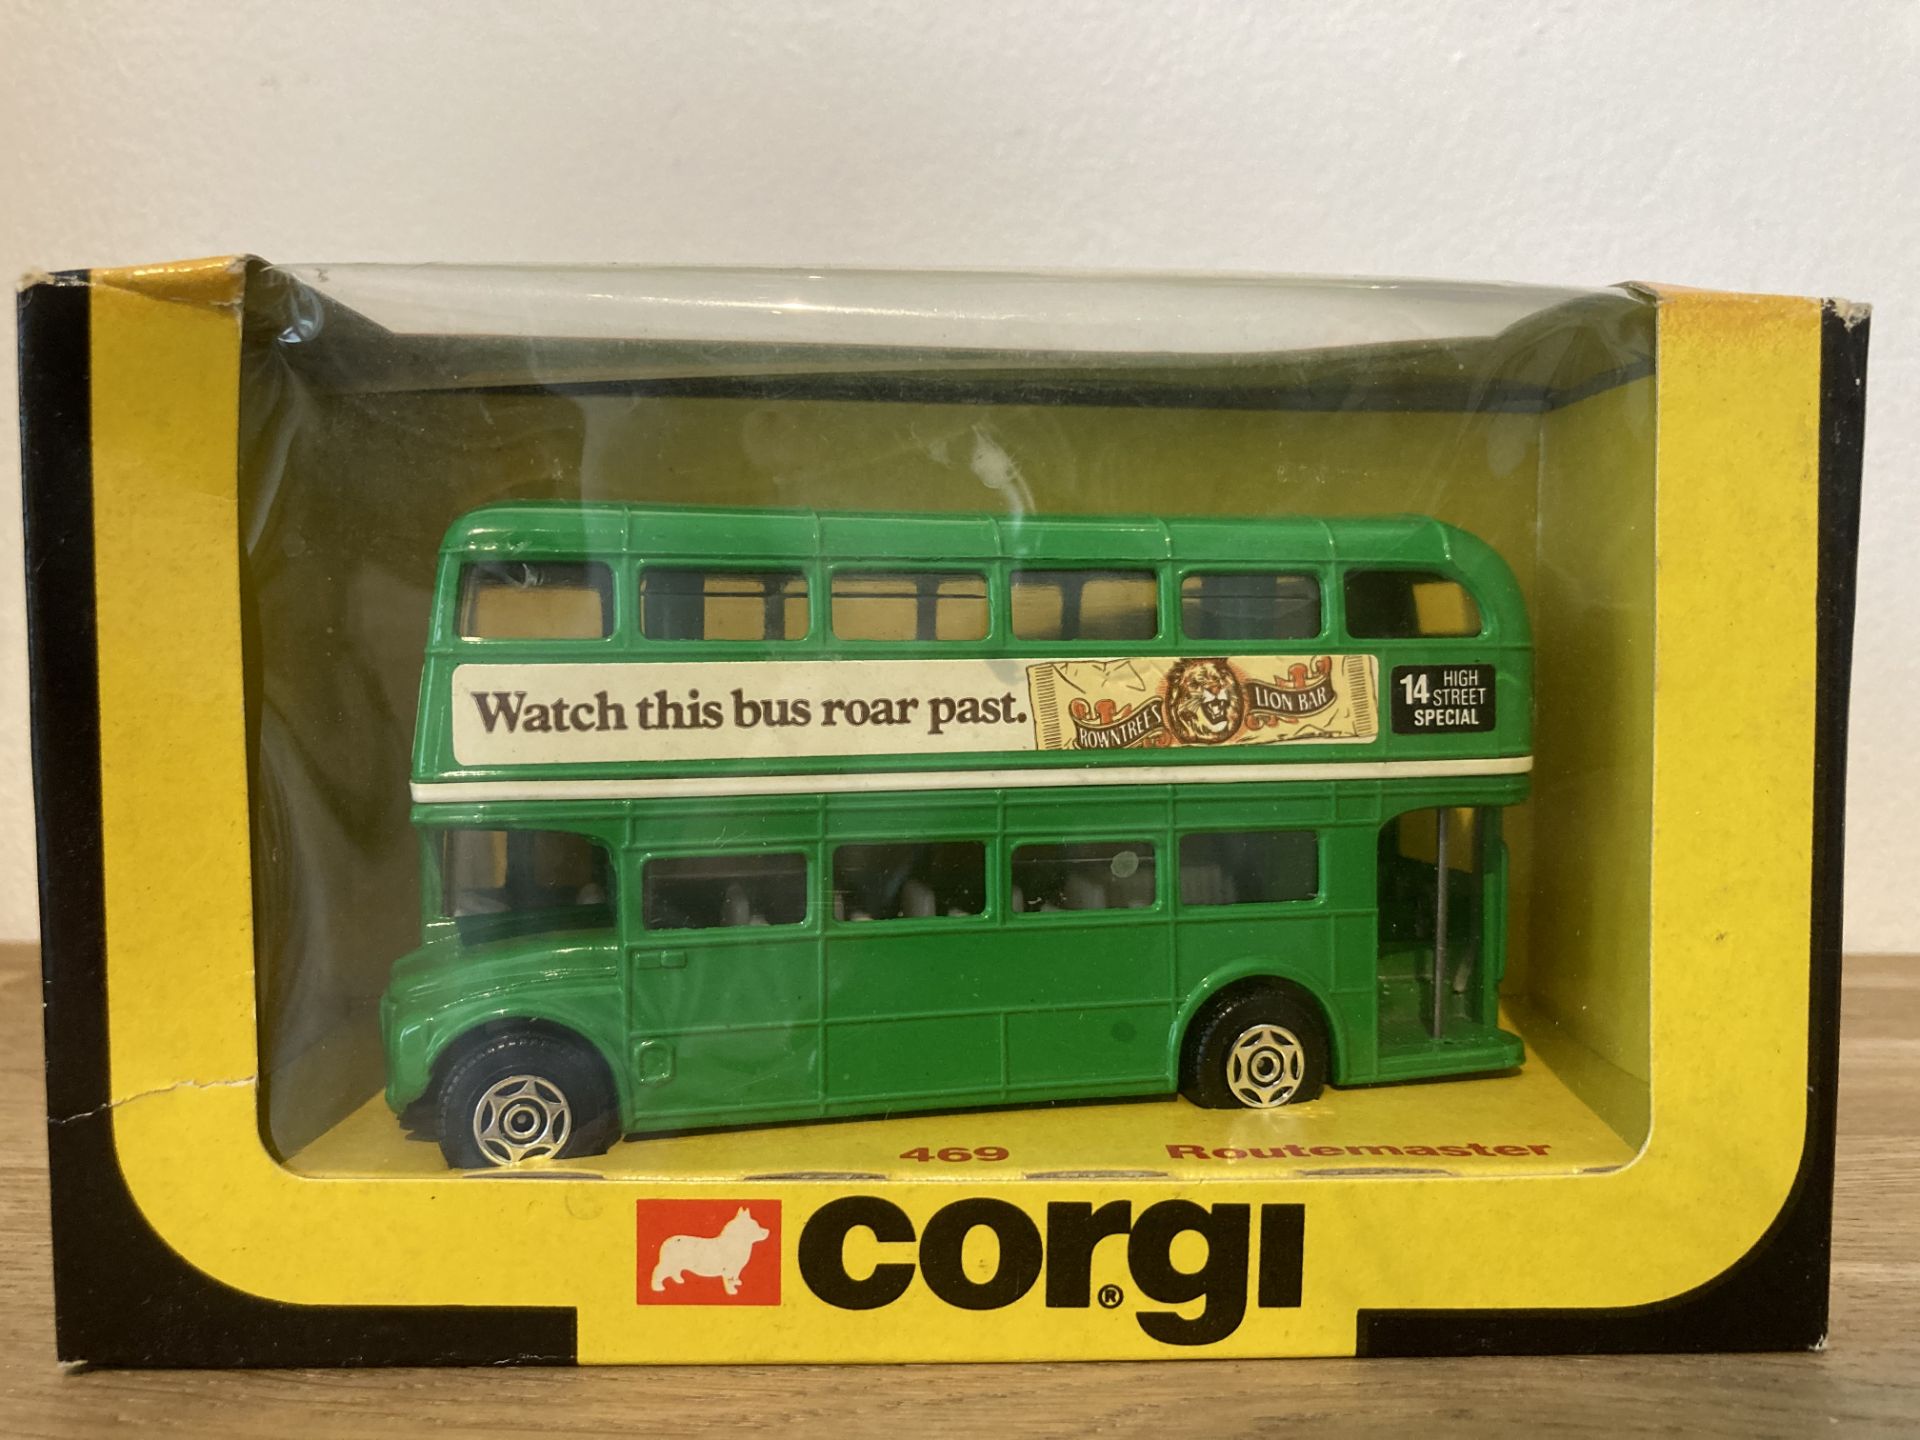 Corgi London Transport, Green Watch This Bus Roar Past Routemaster - 469